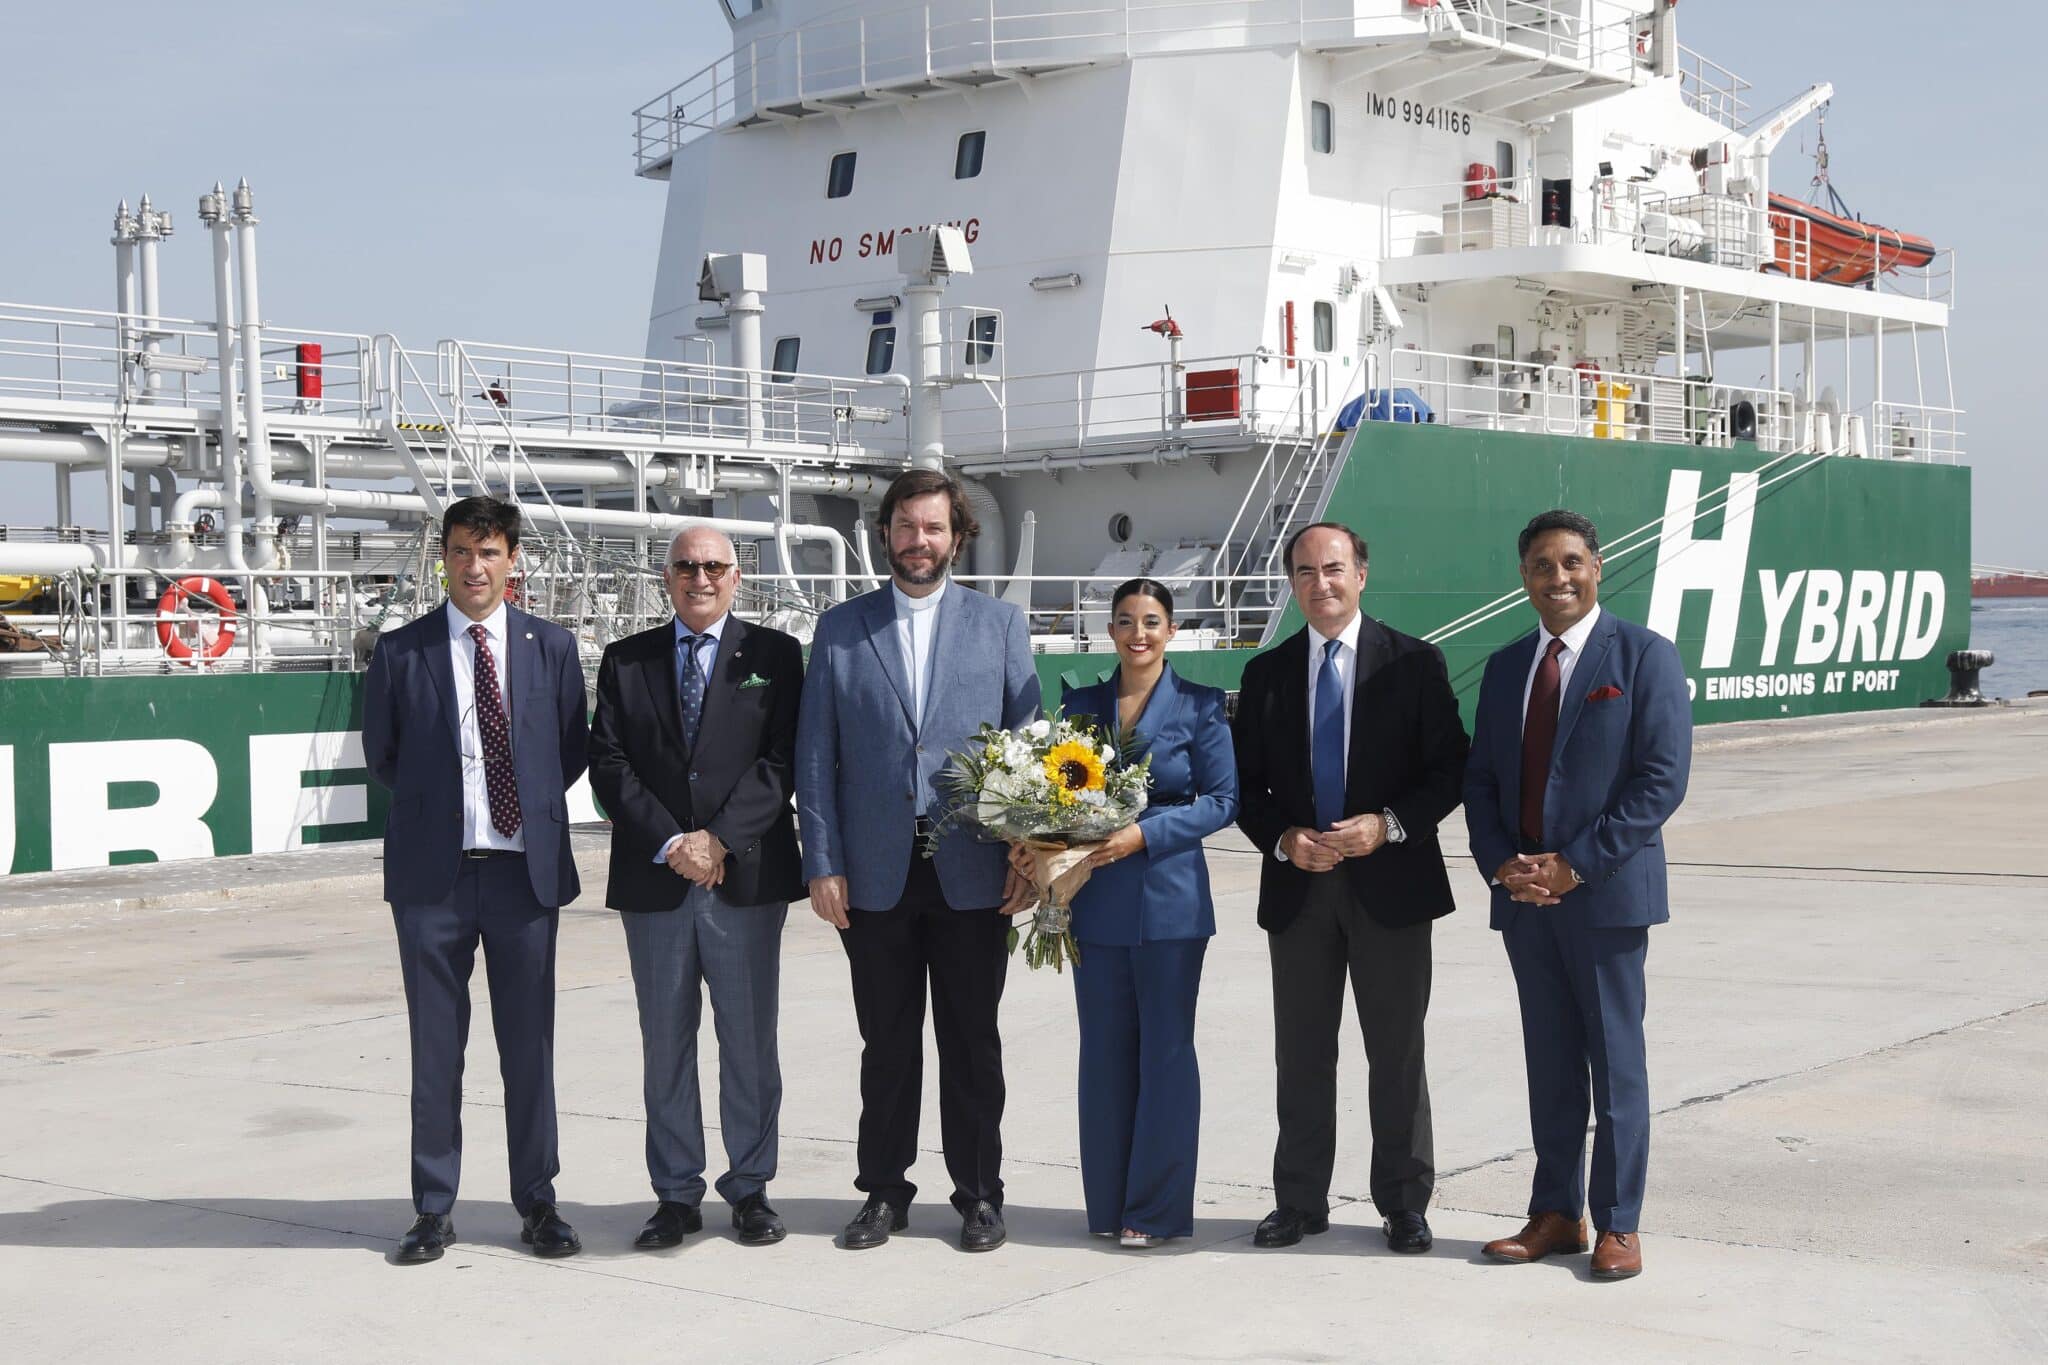 Cepsa, Mureloil present hybrid supply ship in Port of Algeciras